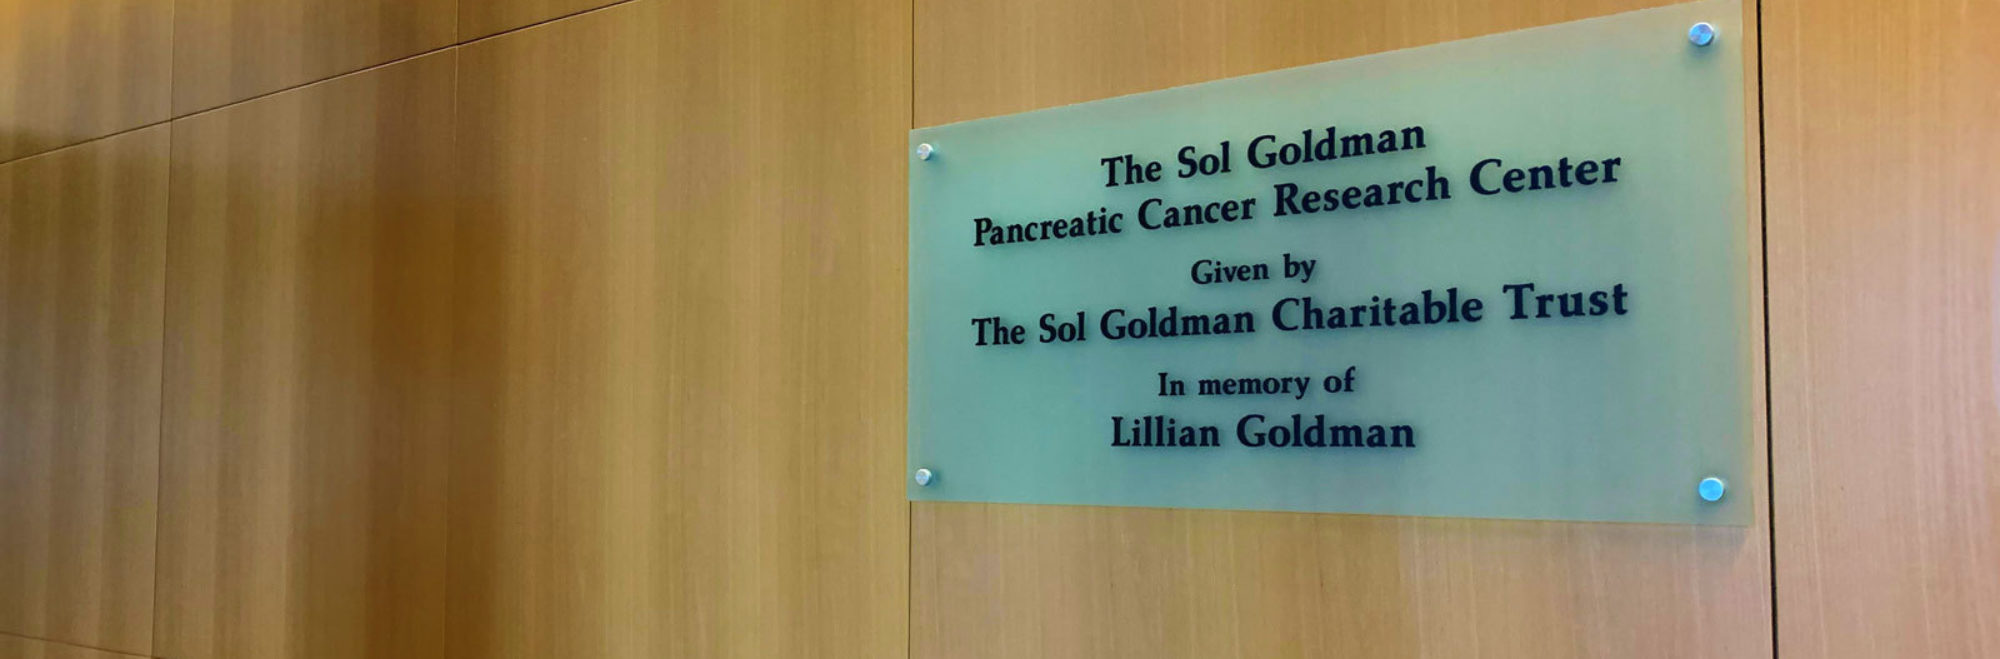 Sol Goldman Pancreatic Cancer Research Center plaque